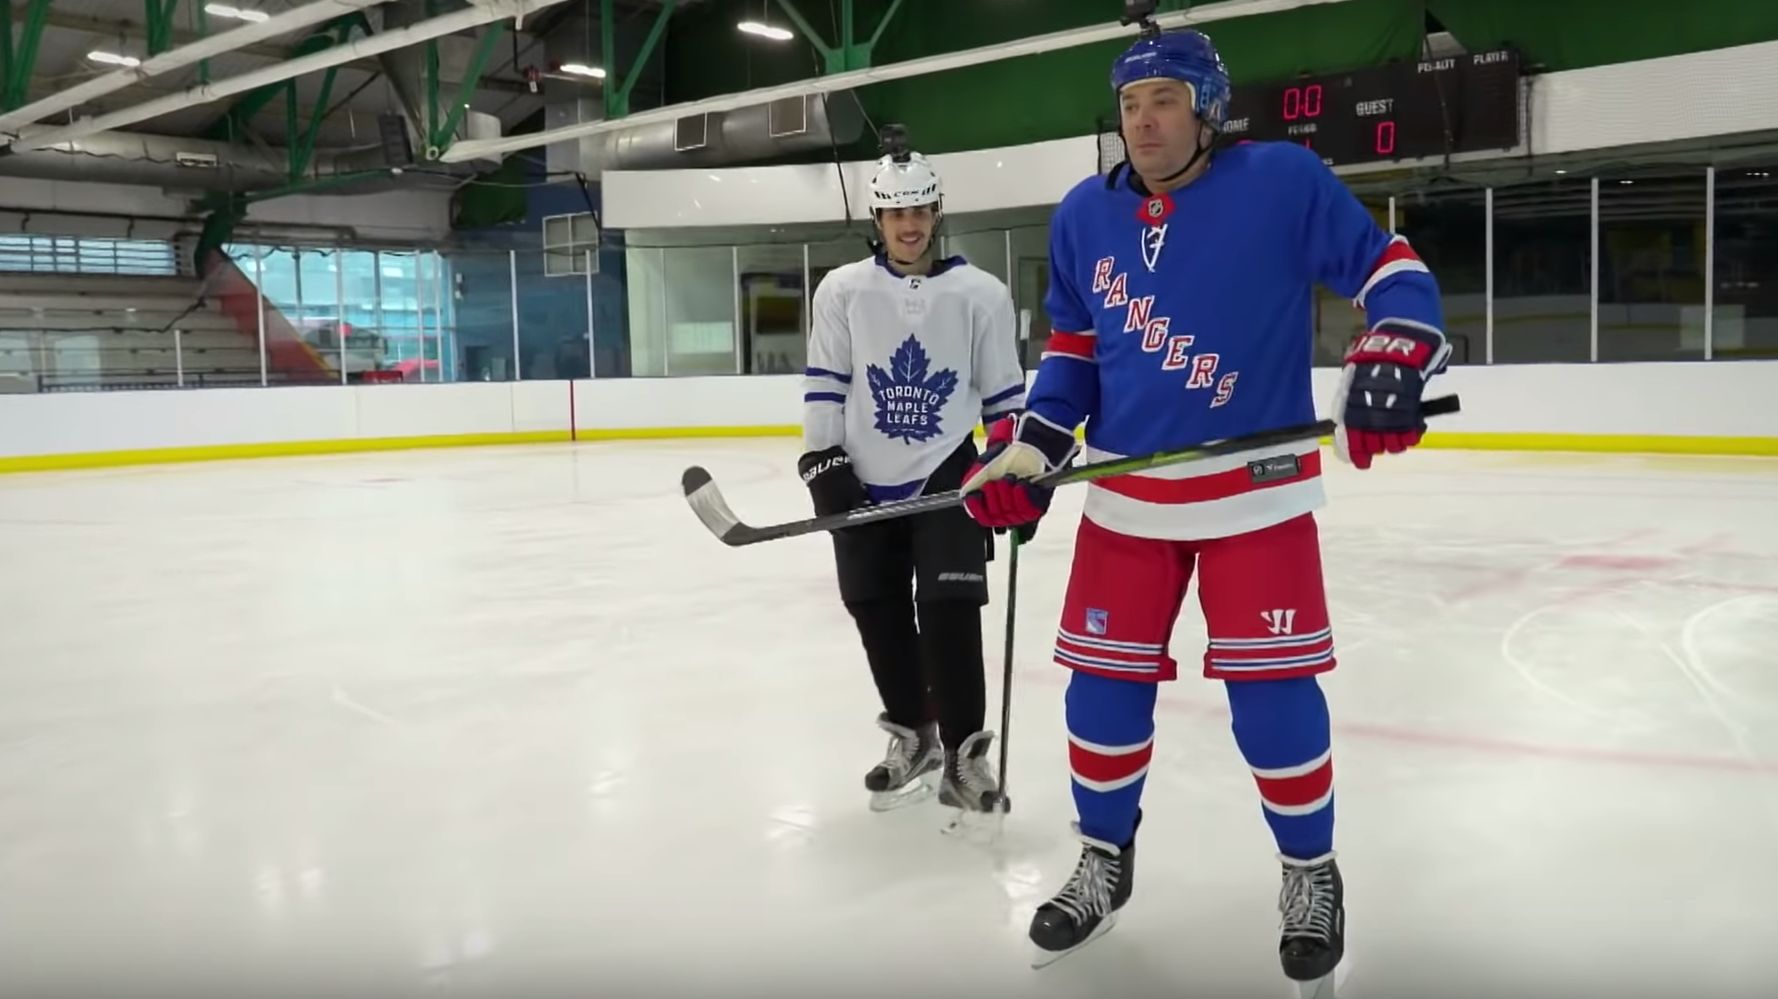 Jimmy Fallon & Justin Bieber Play Hockey on 'Tonight Show': Watch